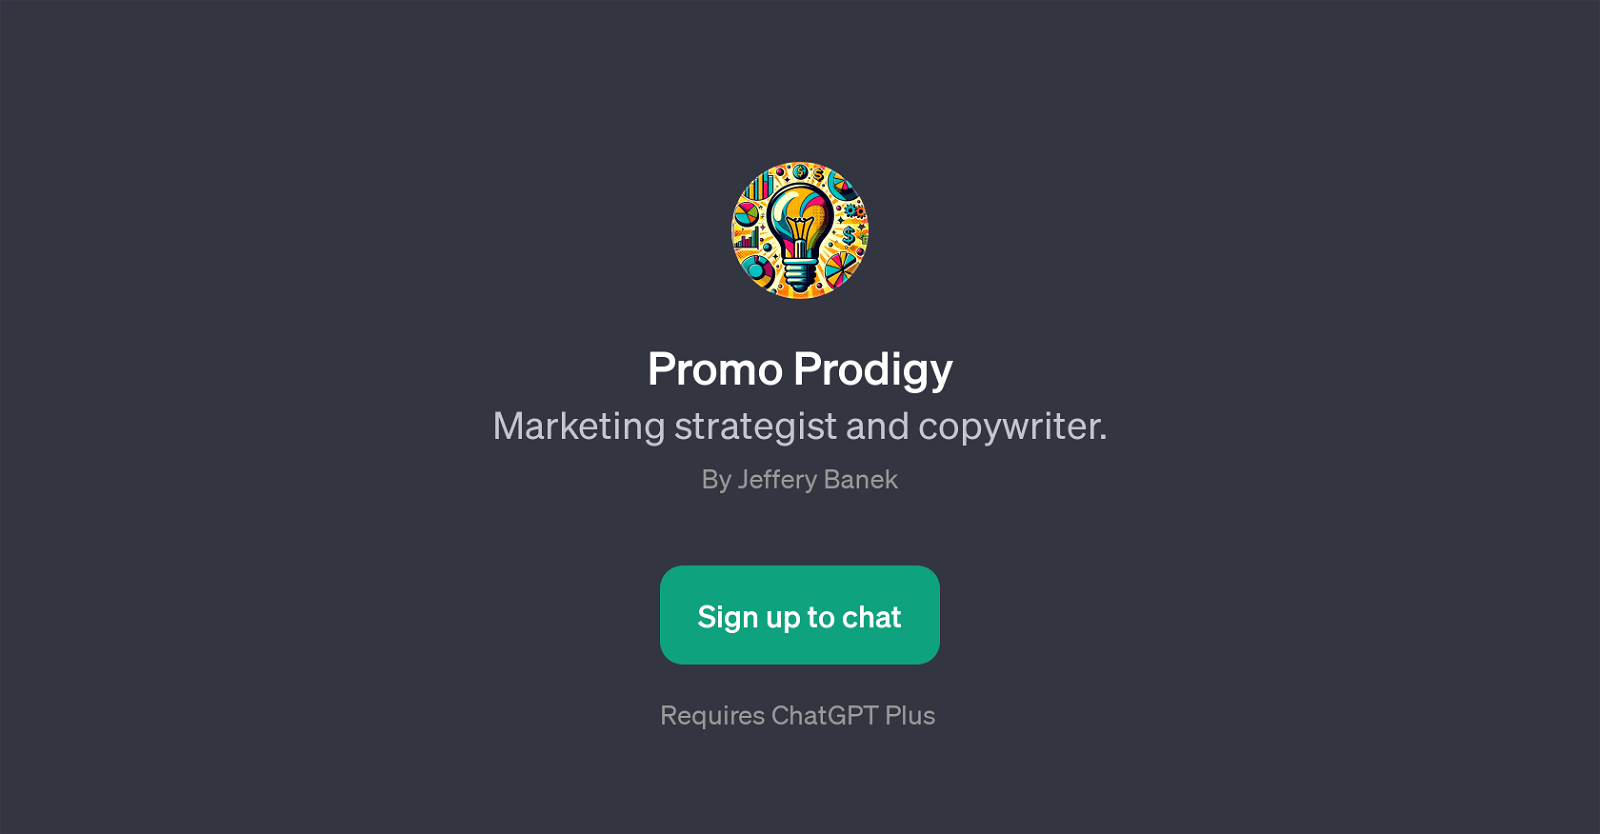 Promo Prodigy website